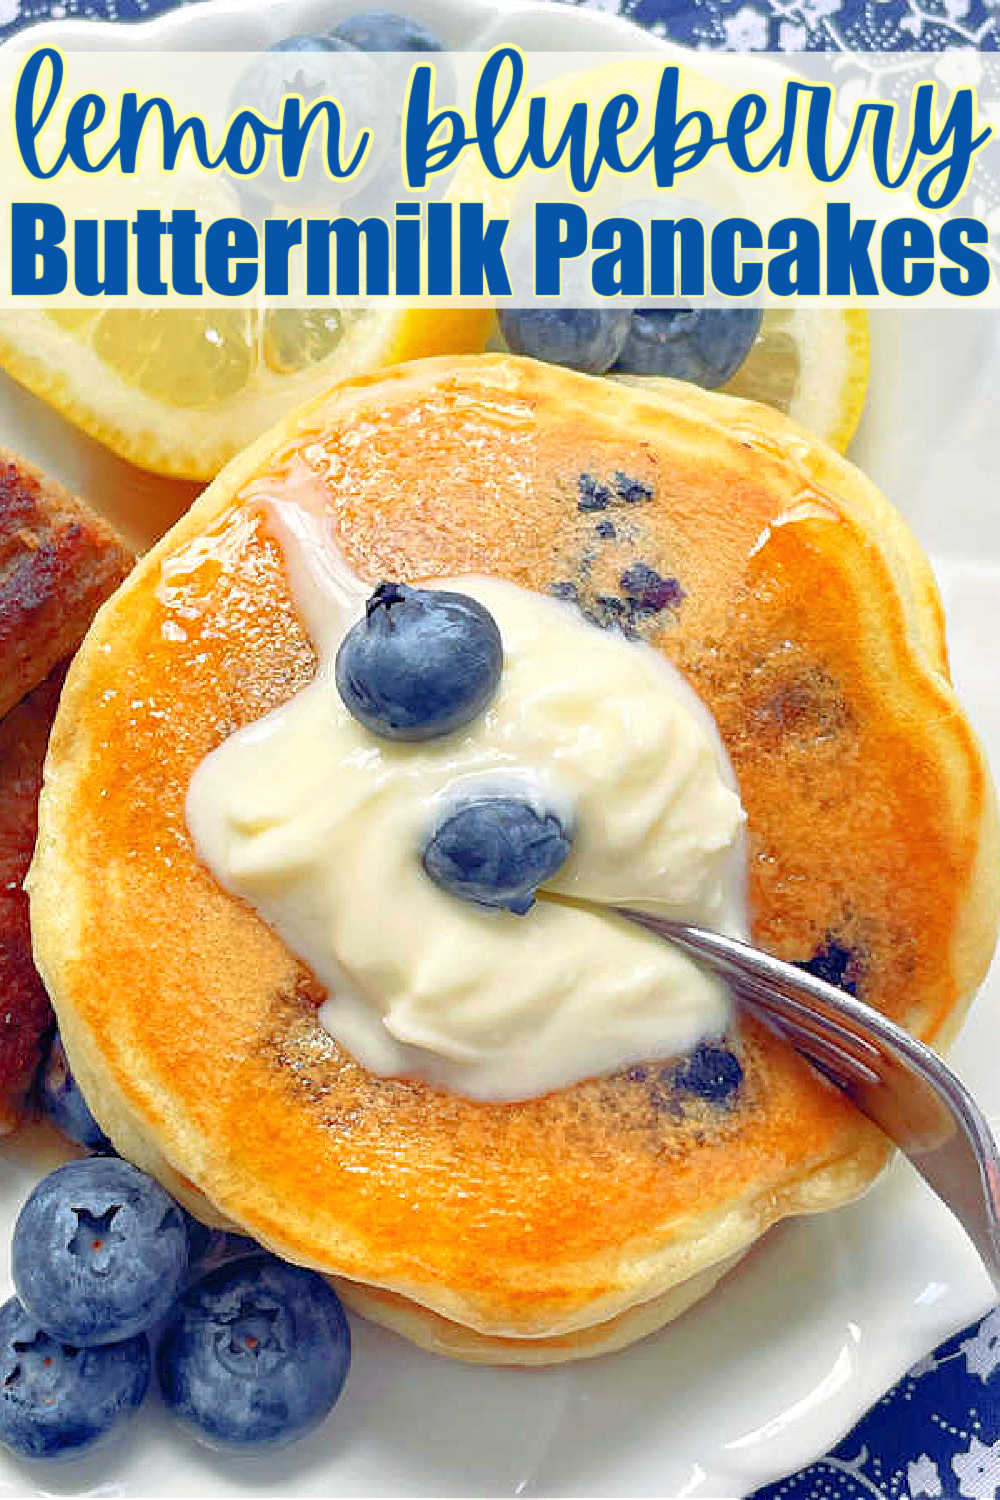 Lemon Blueberry Pancakes | Foodtastic Mom #pancakerecipes #buttermilkpancakes #lemonblueberrypancakes via @foodtasticmom